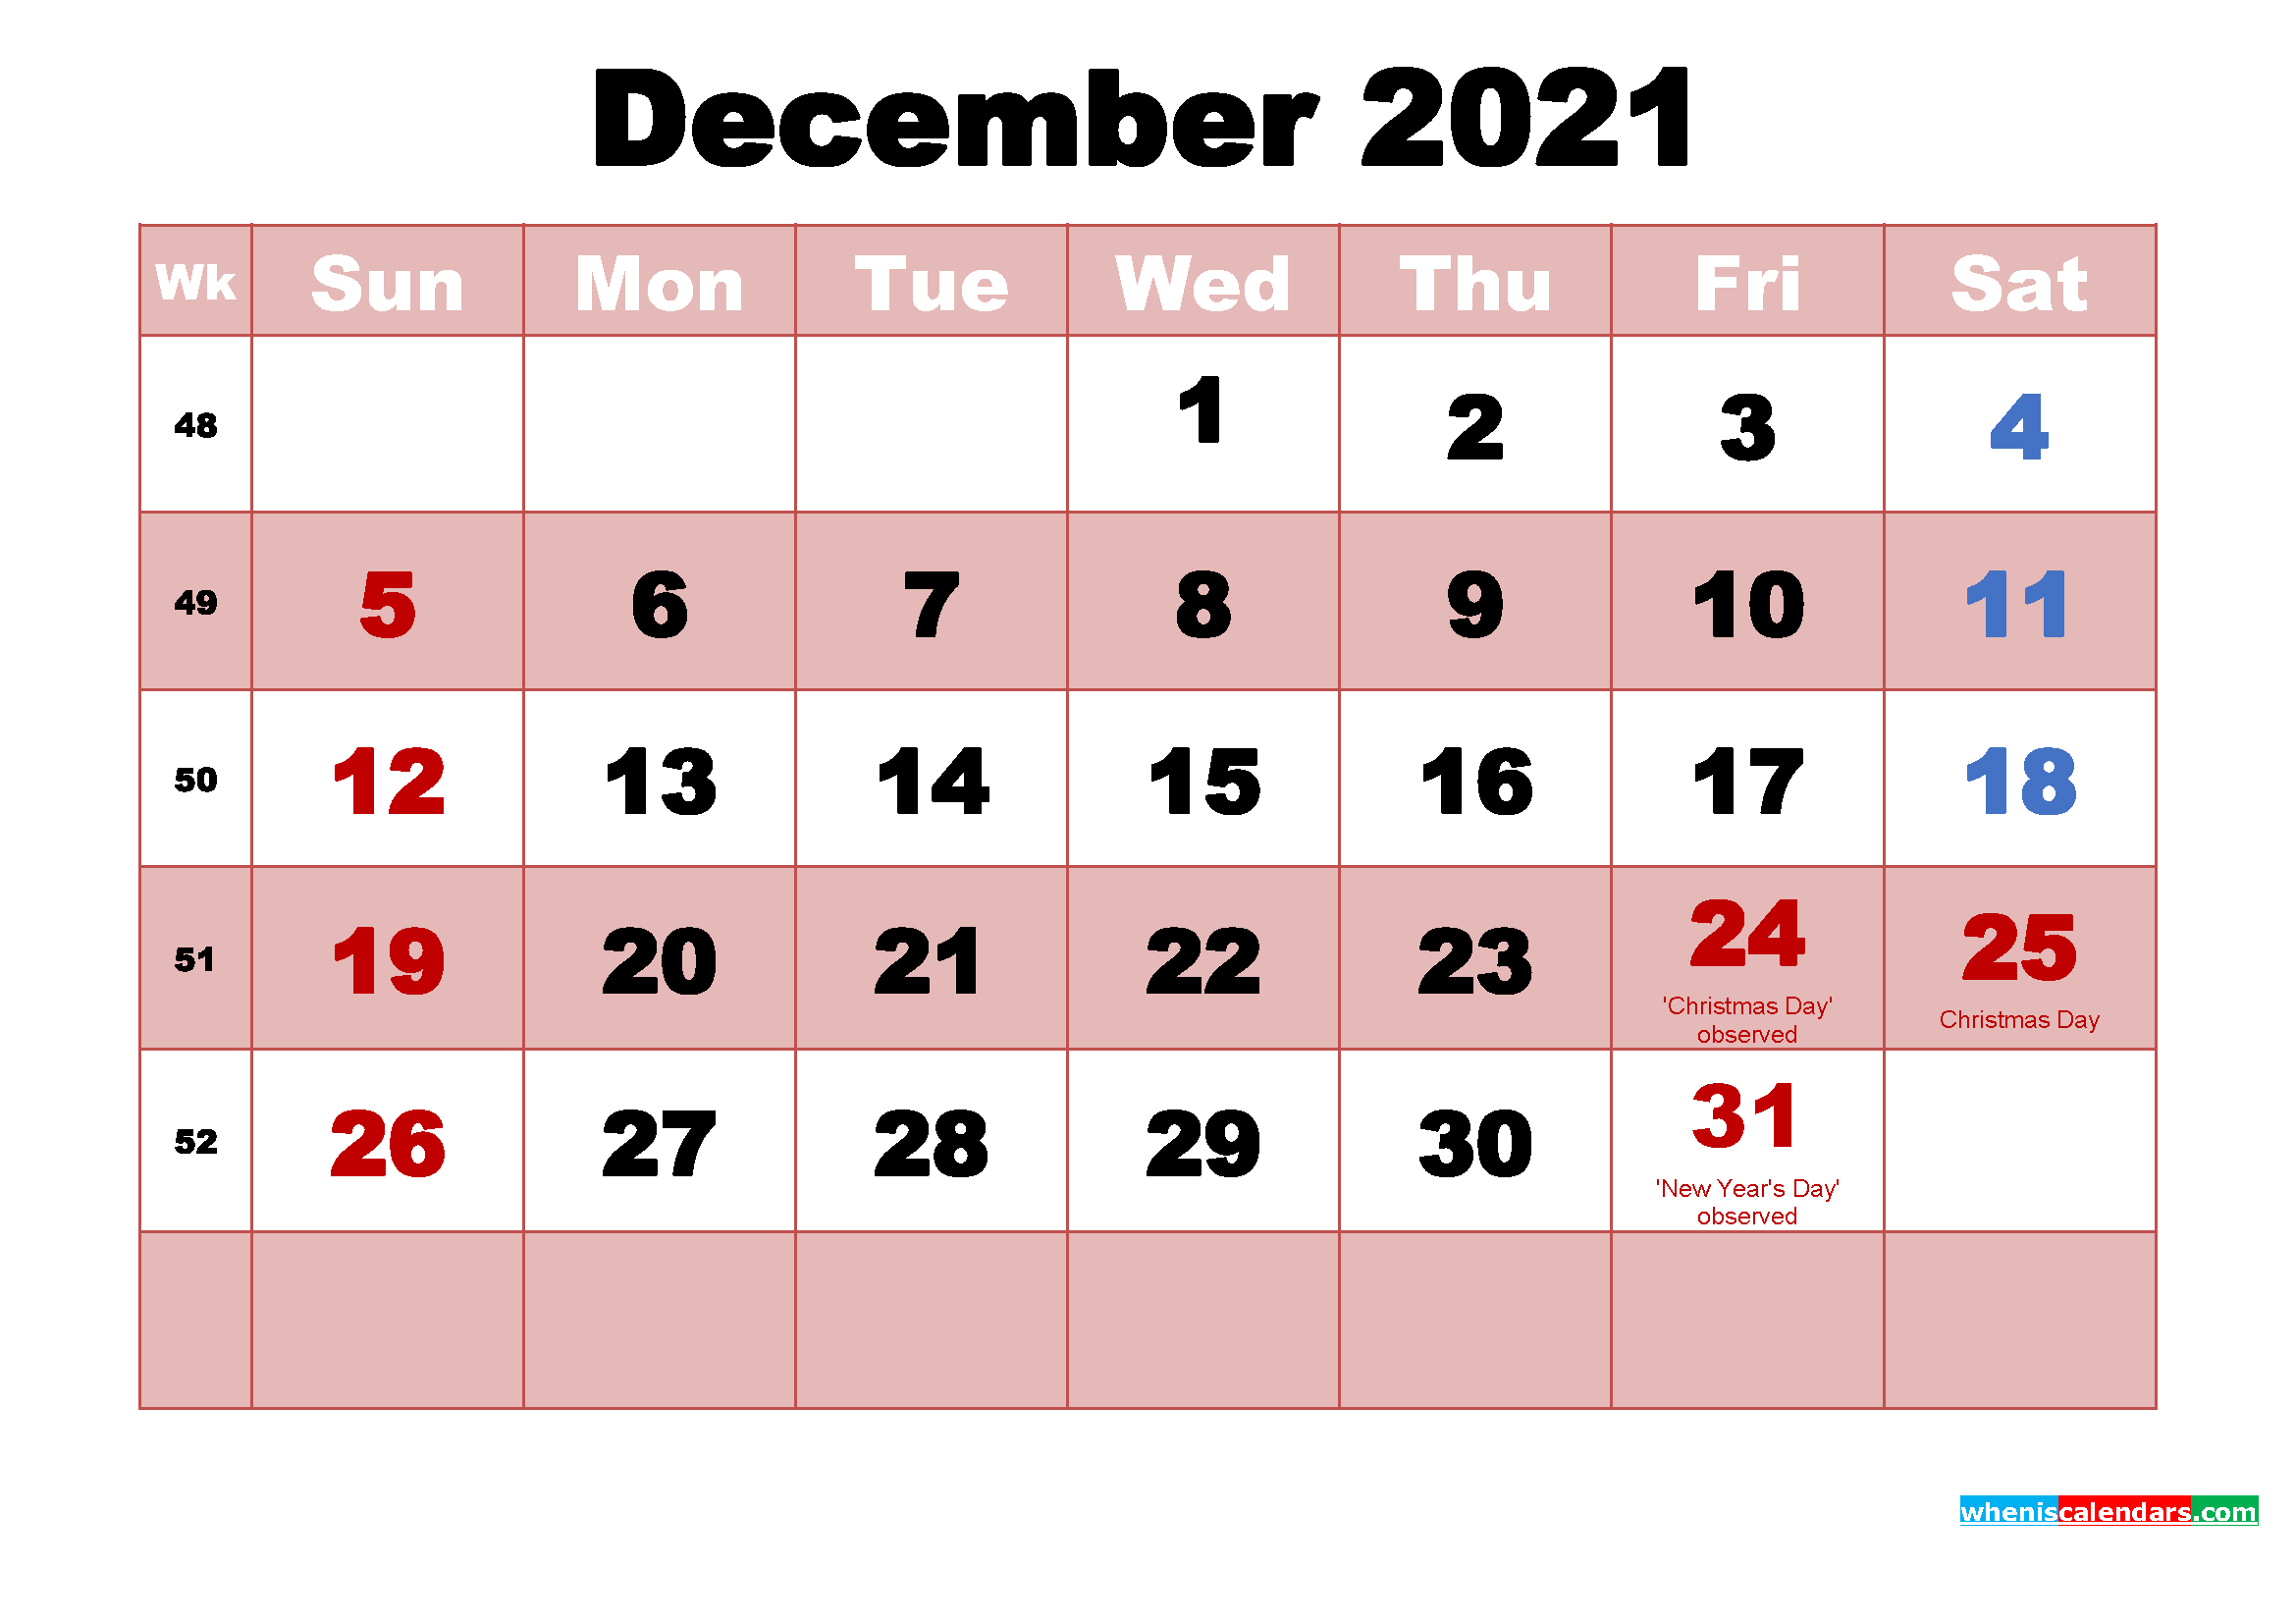 December 2021 Holidays In Us